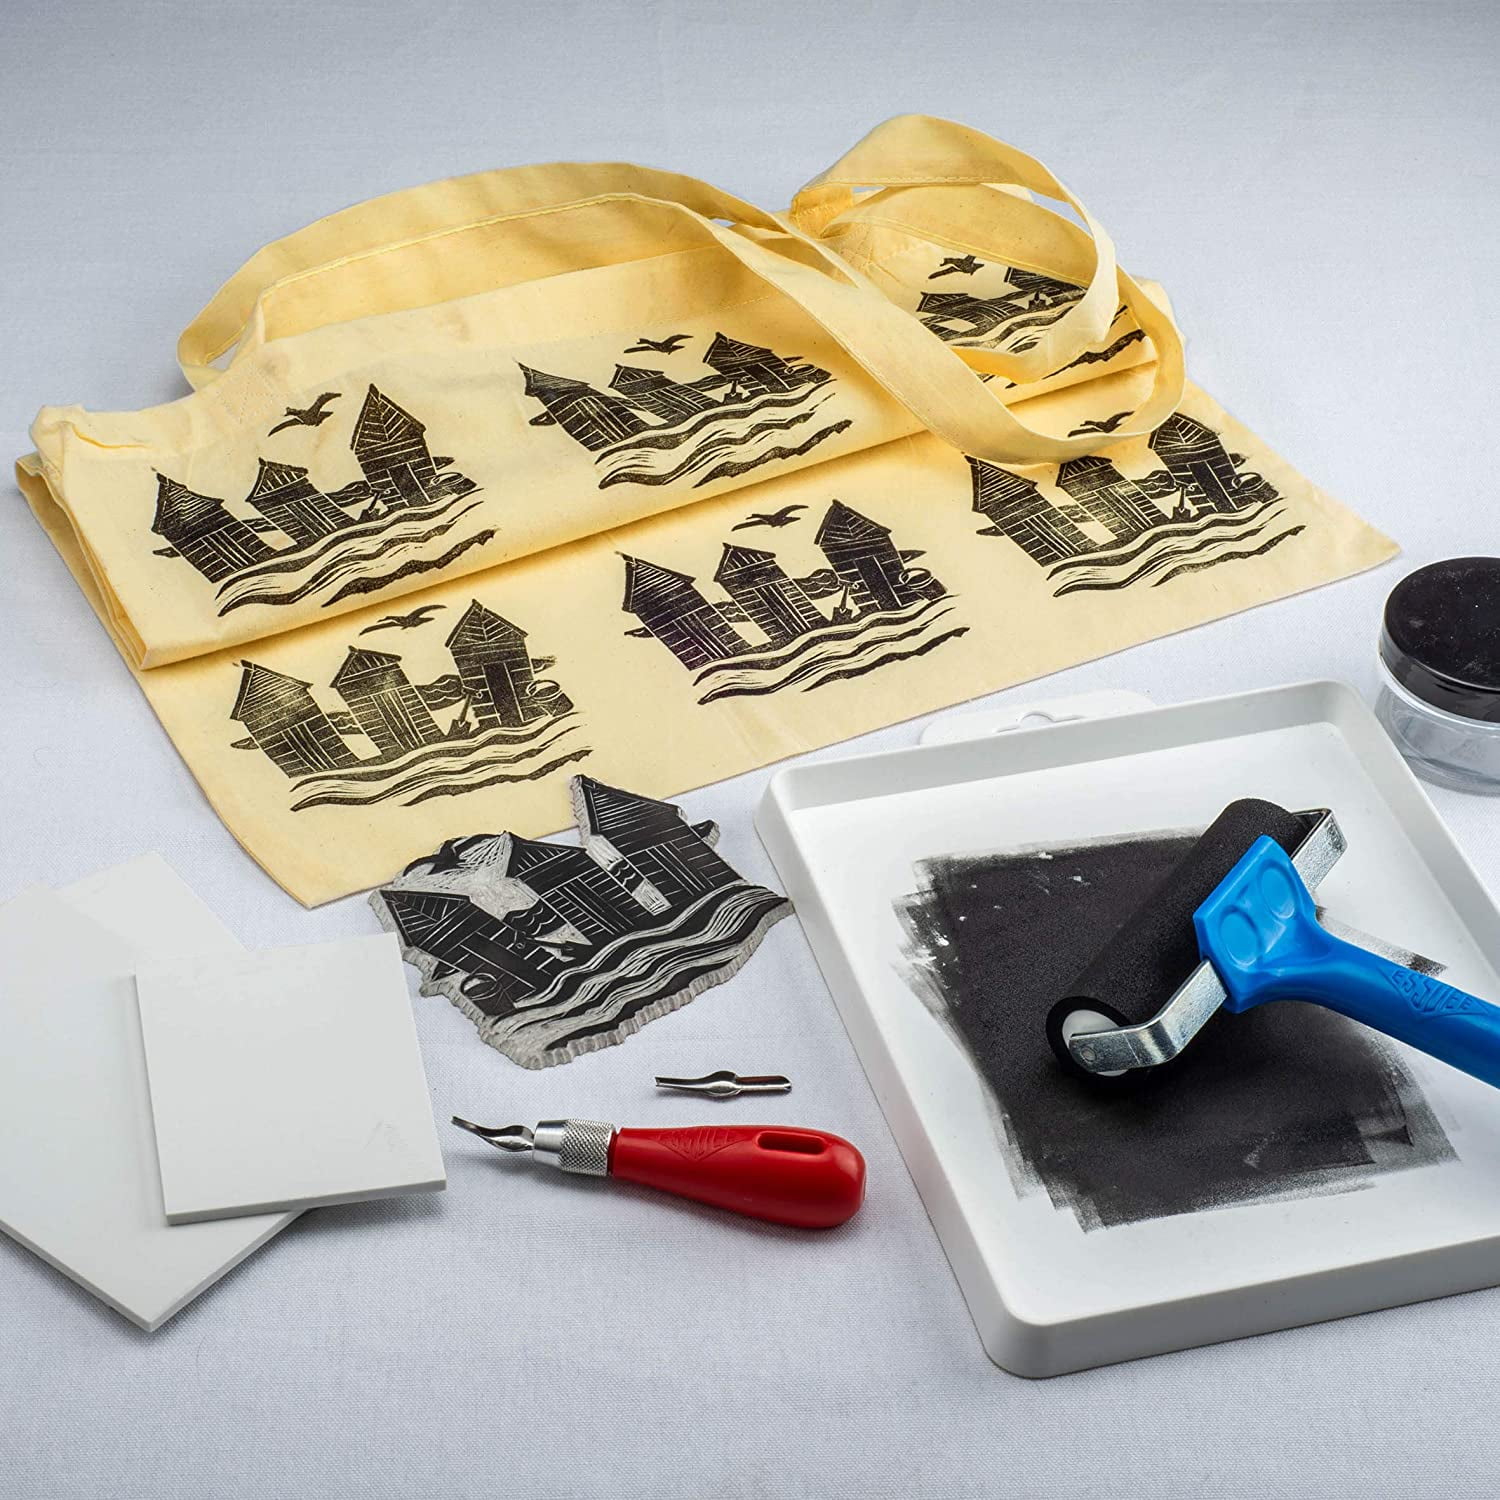  ESSDEE Fabric Lino Printing Kit, FABPK1, Black